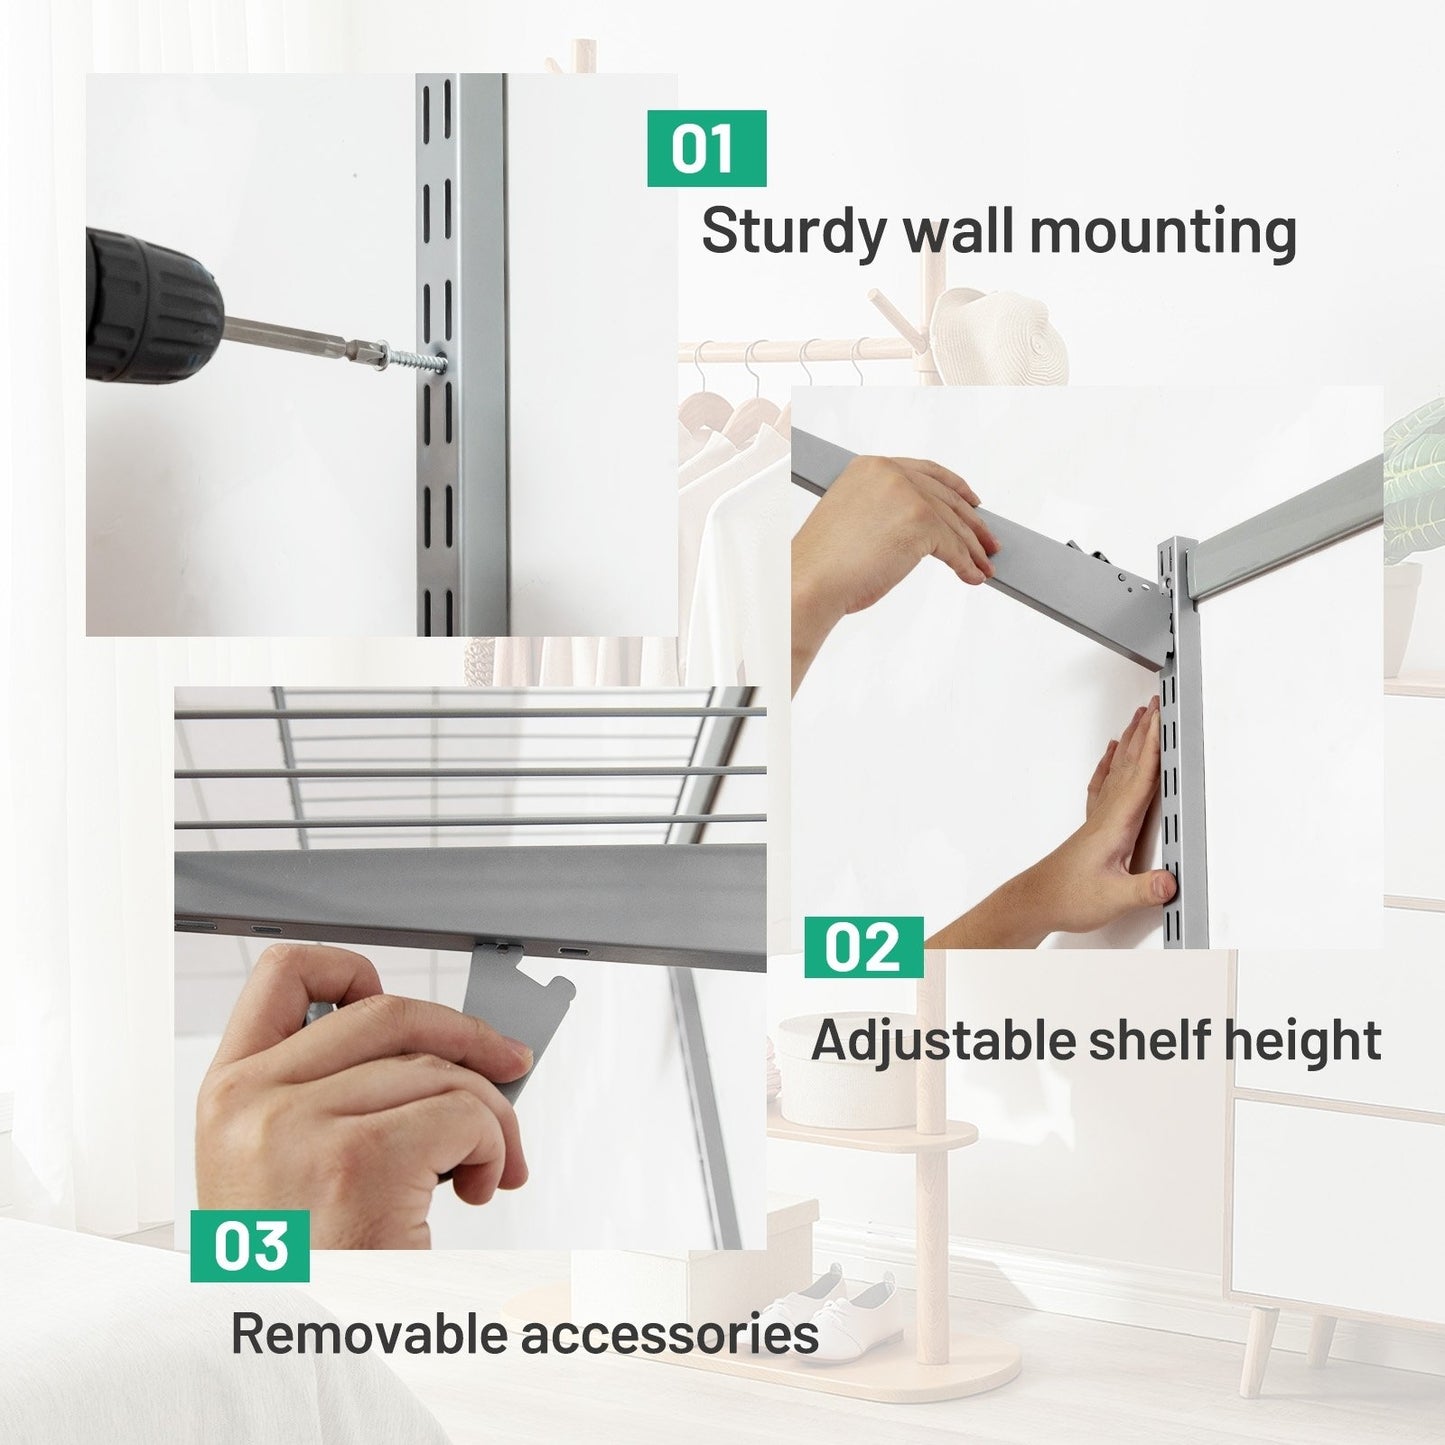 Custom Closet Organizer Kit 3 to 5 Feet Wall-Mounted Closet System with Hang Rod, Gray